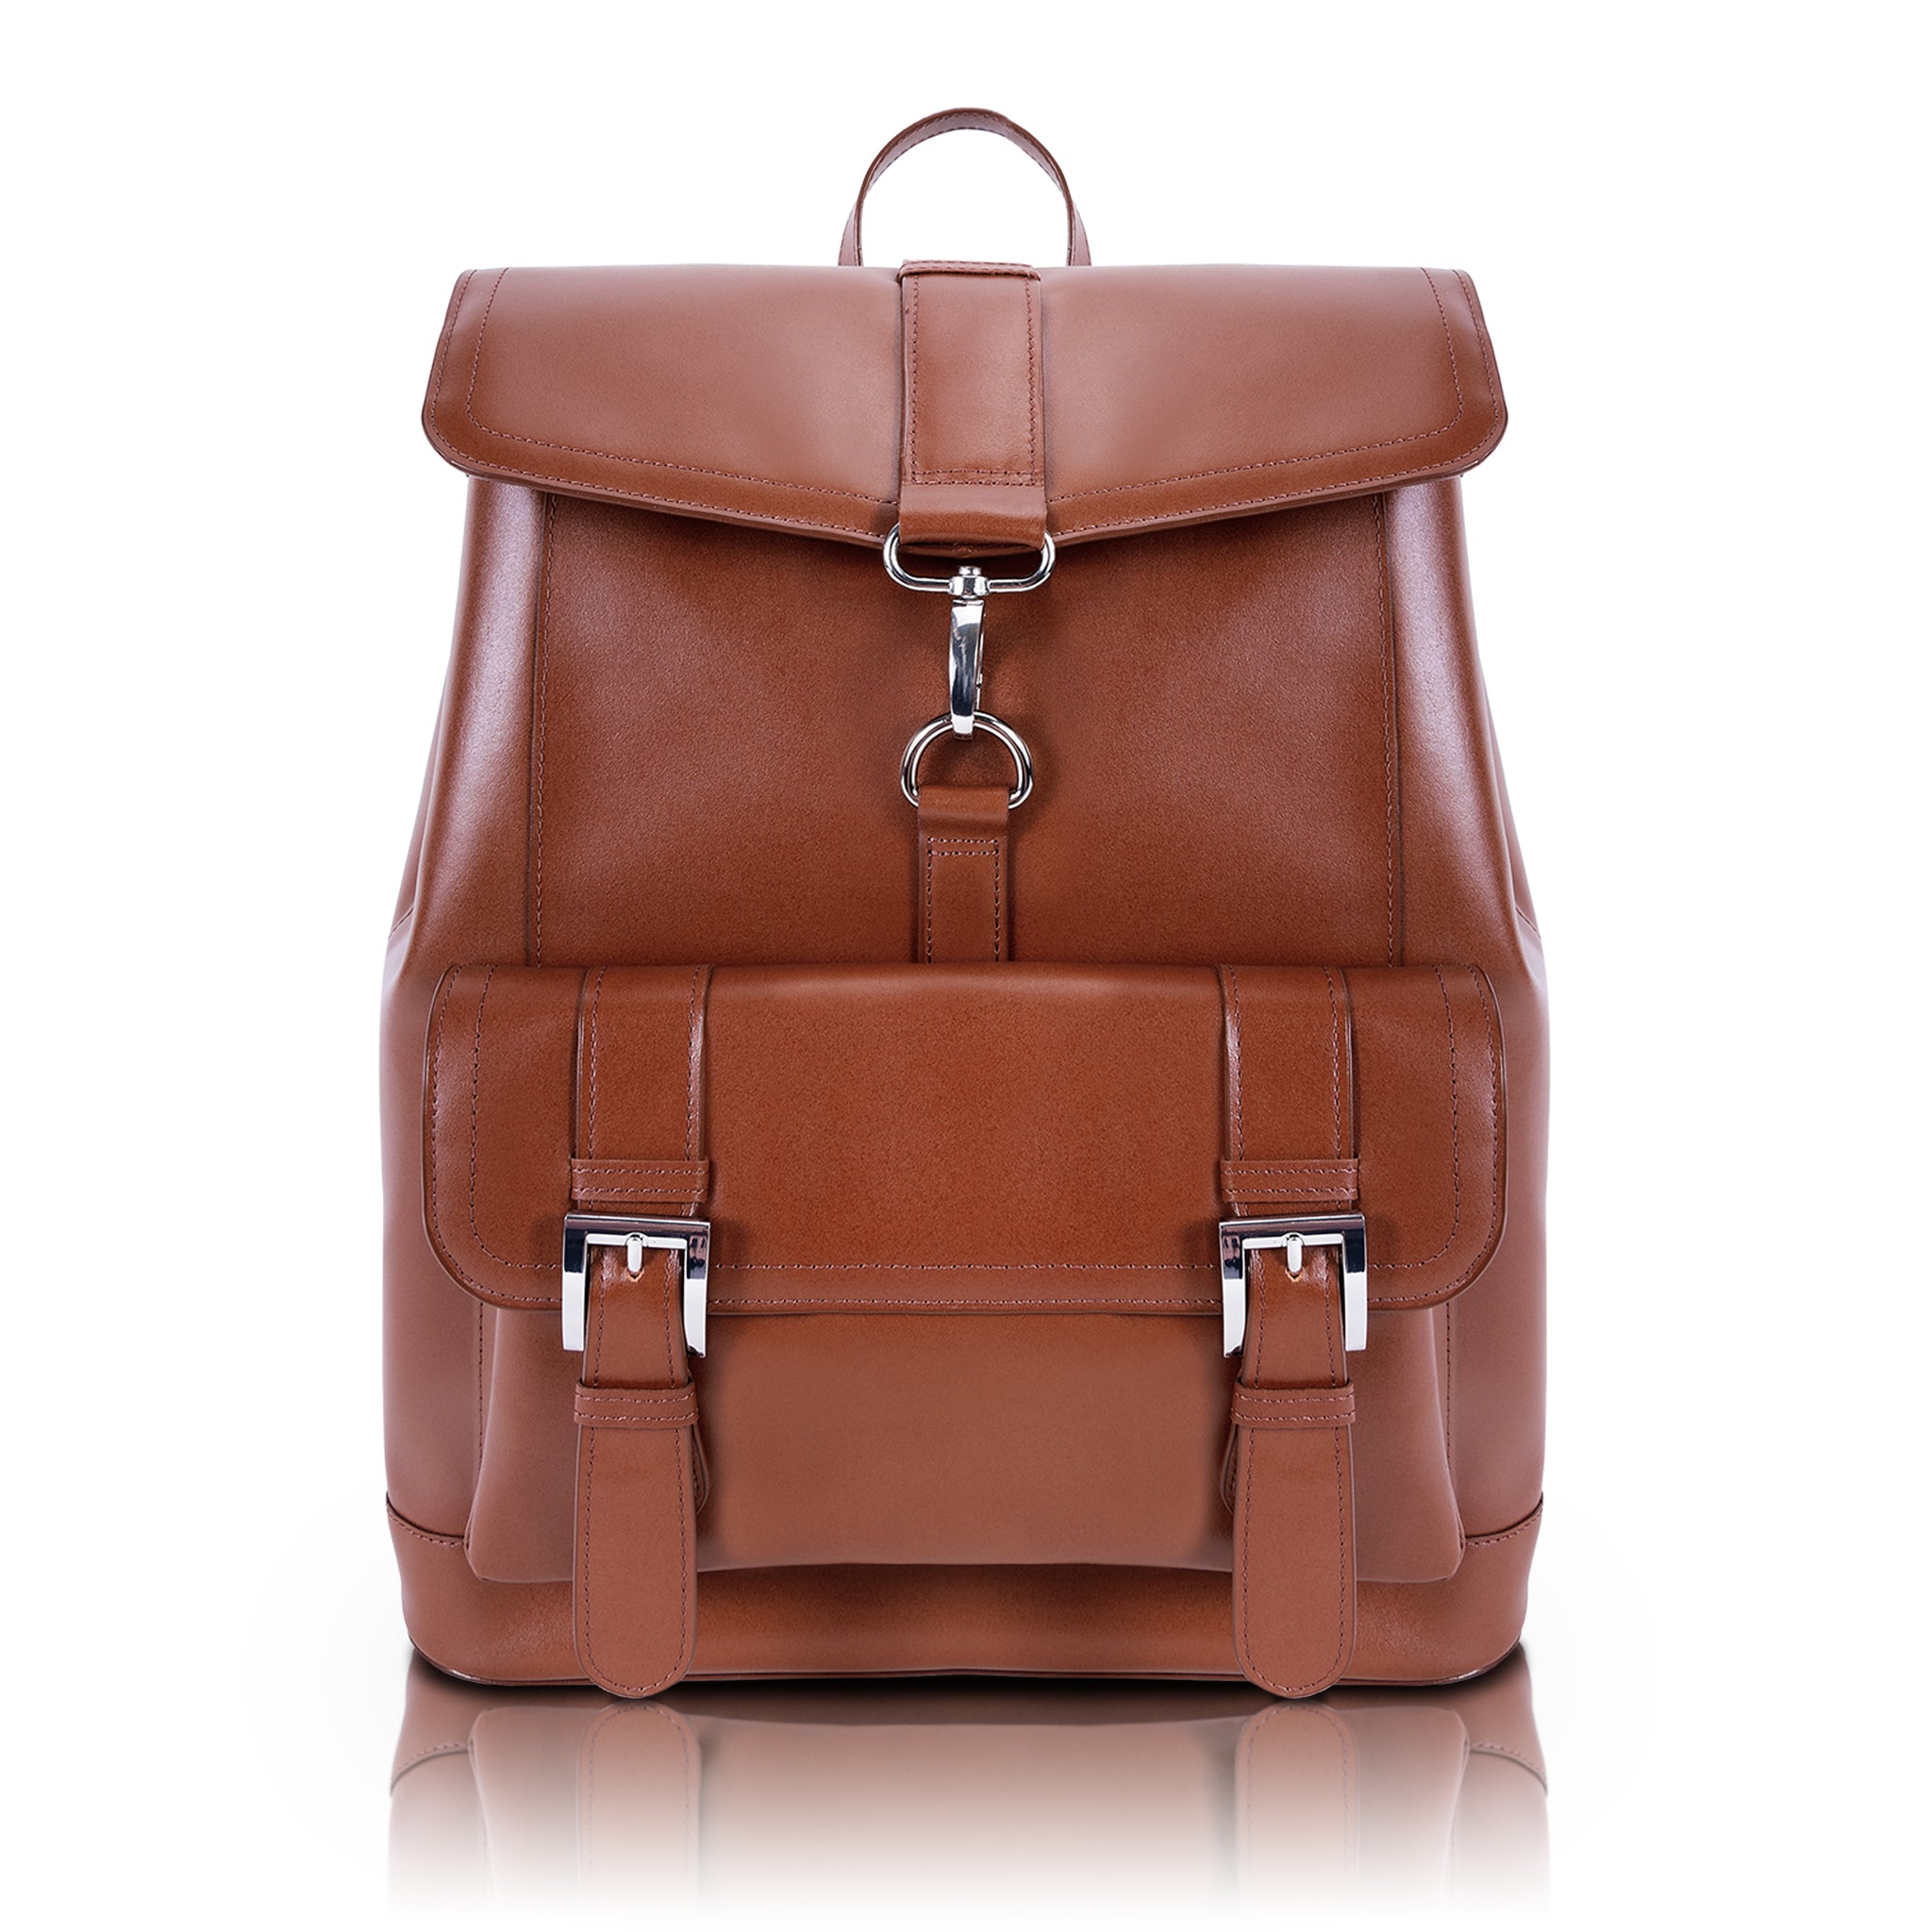 HAGEN | 15” Leather Laptop Backpack